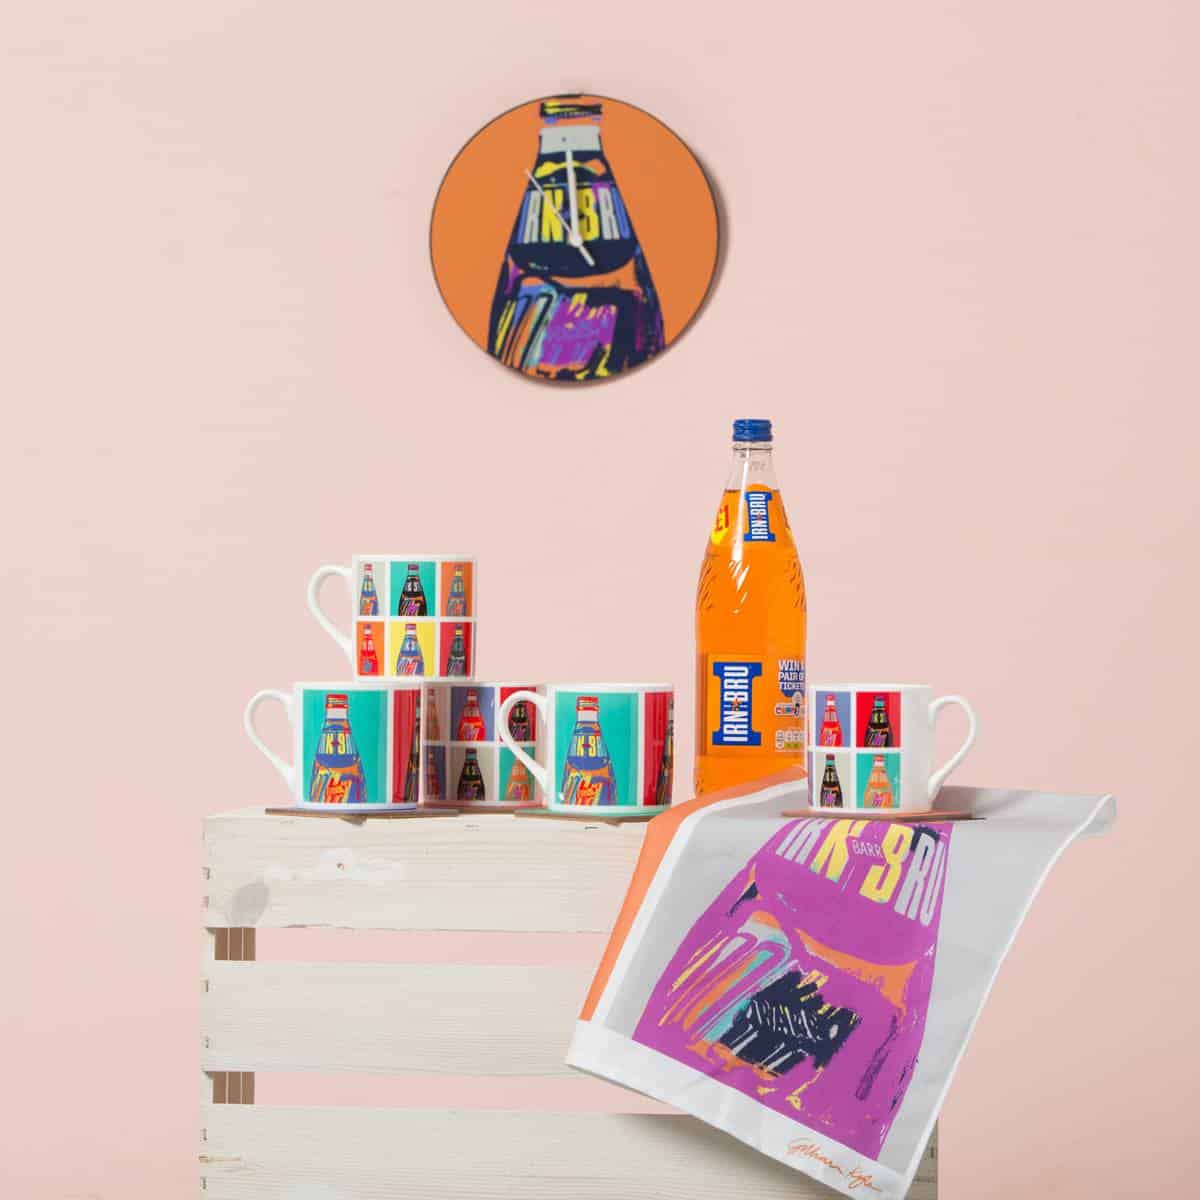 Irn Bru merchandise by Gillian Kyle